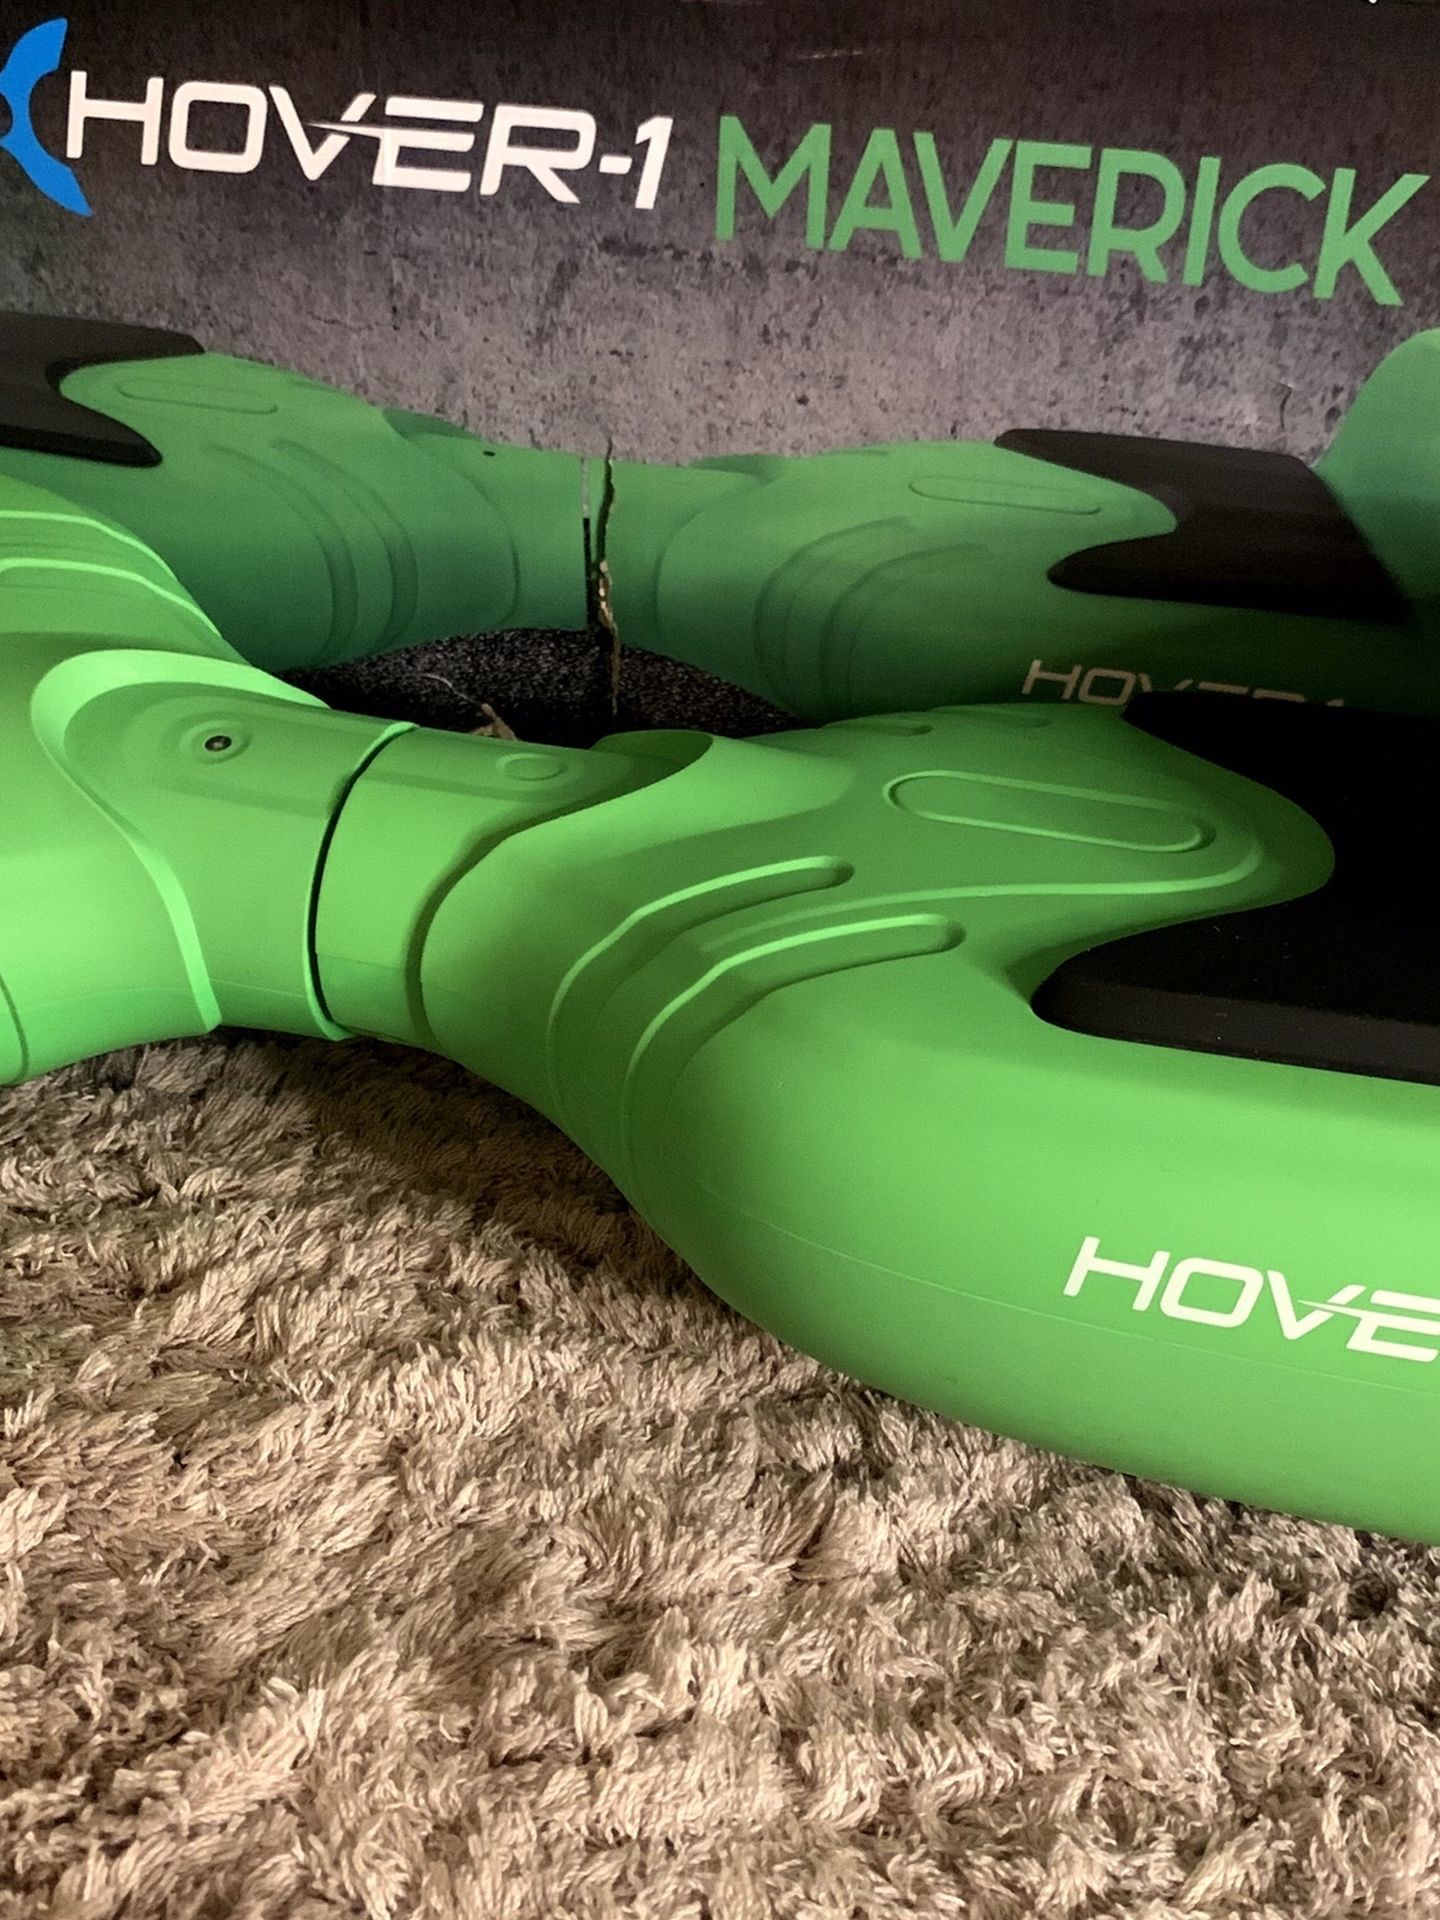 Hover-1 Maverick Hoverboard (Green)